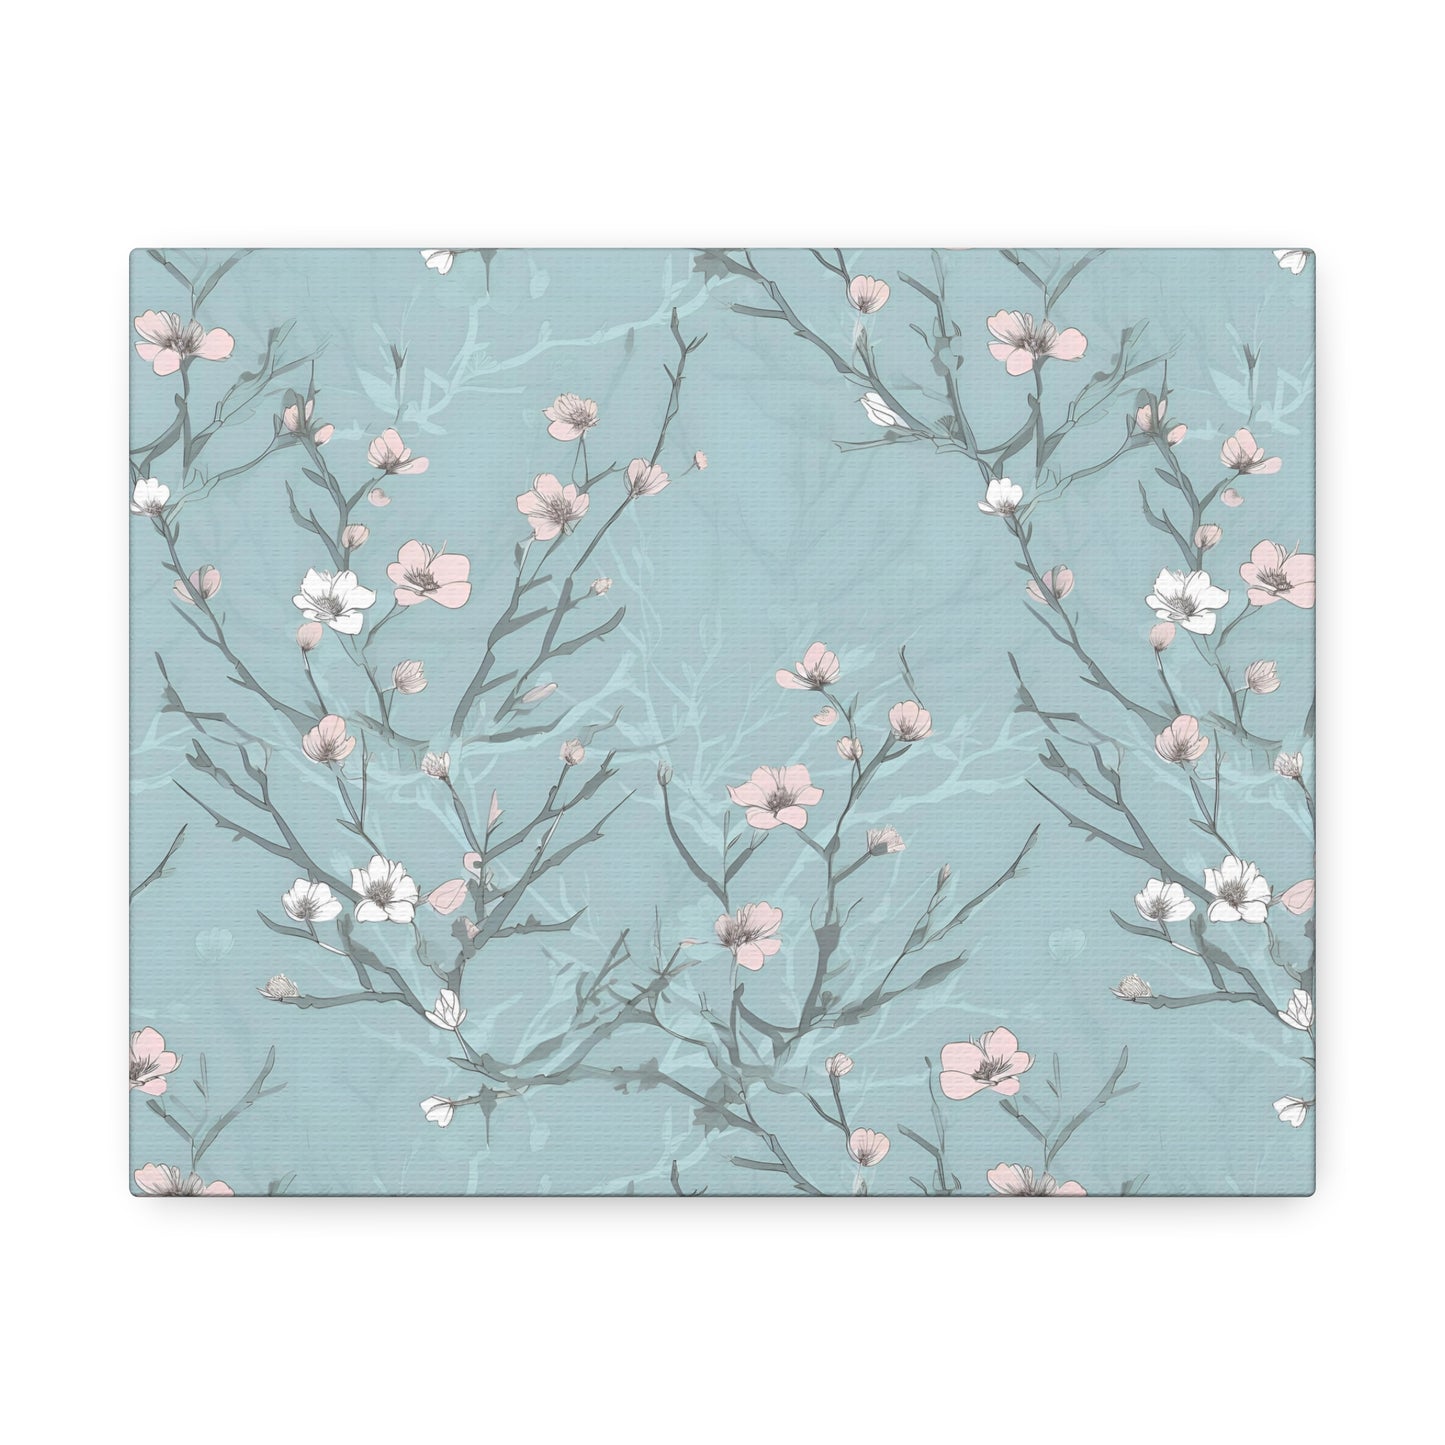 Sakura Serenity - Japanese Cherry Blossom Wall Art Canvas